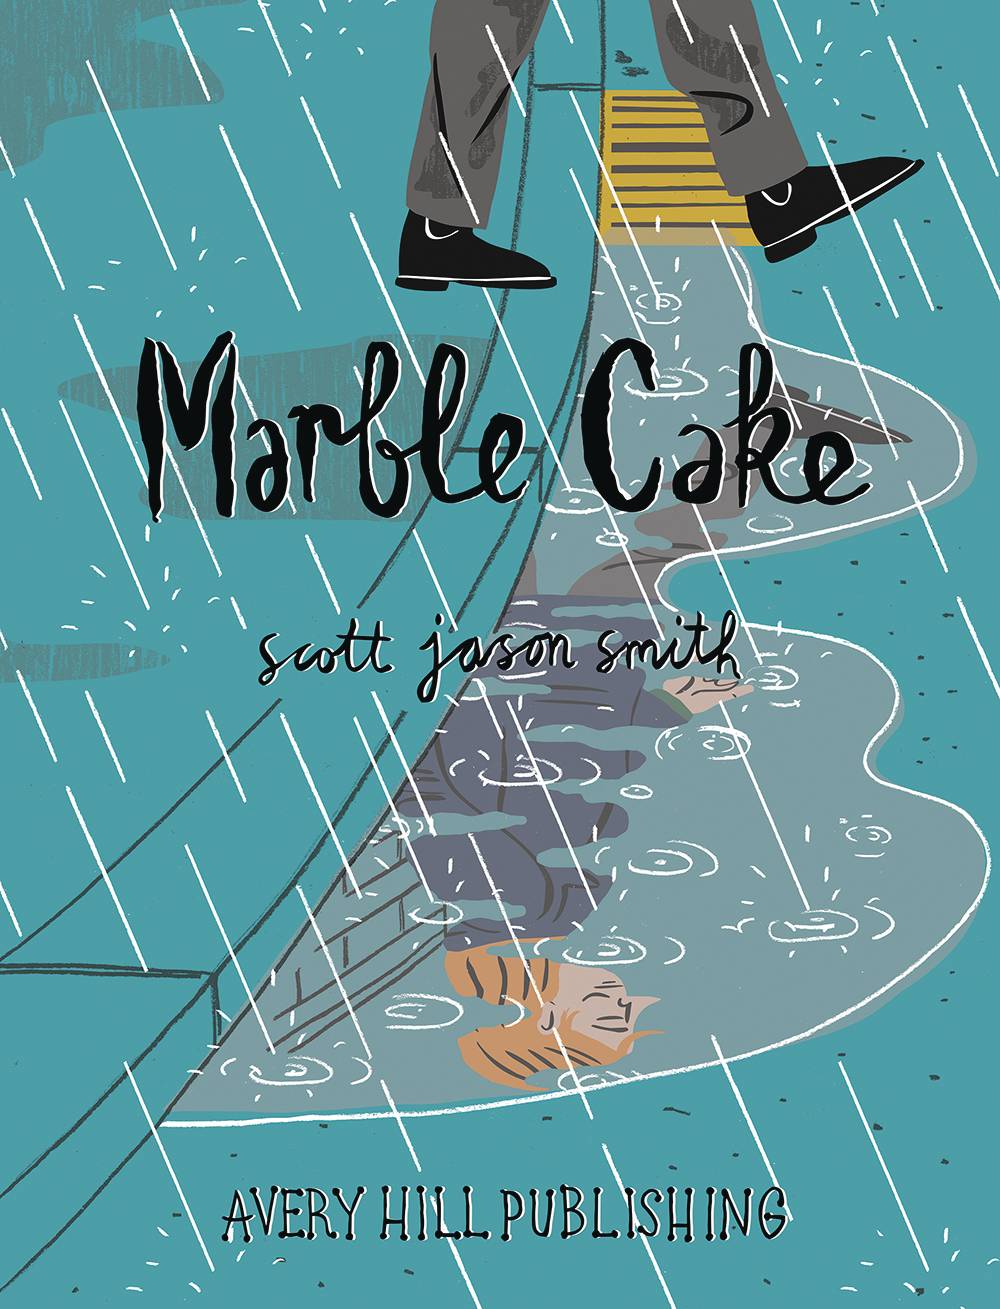 Marble Cake by Scott Jason Smith